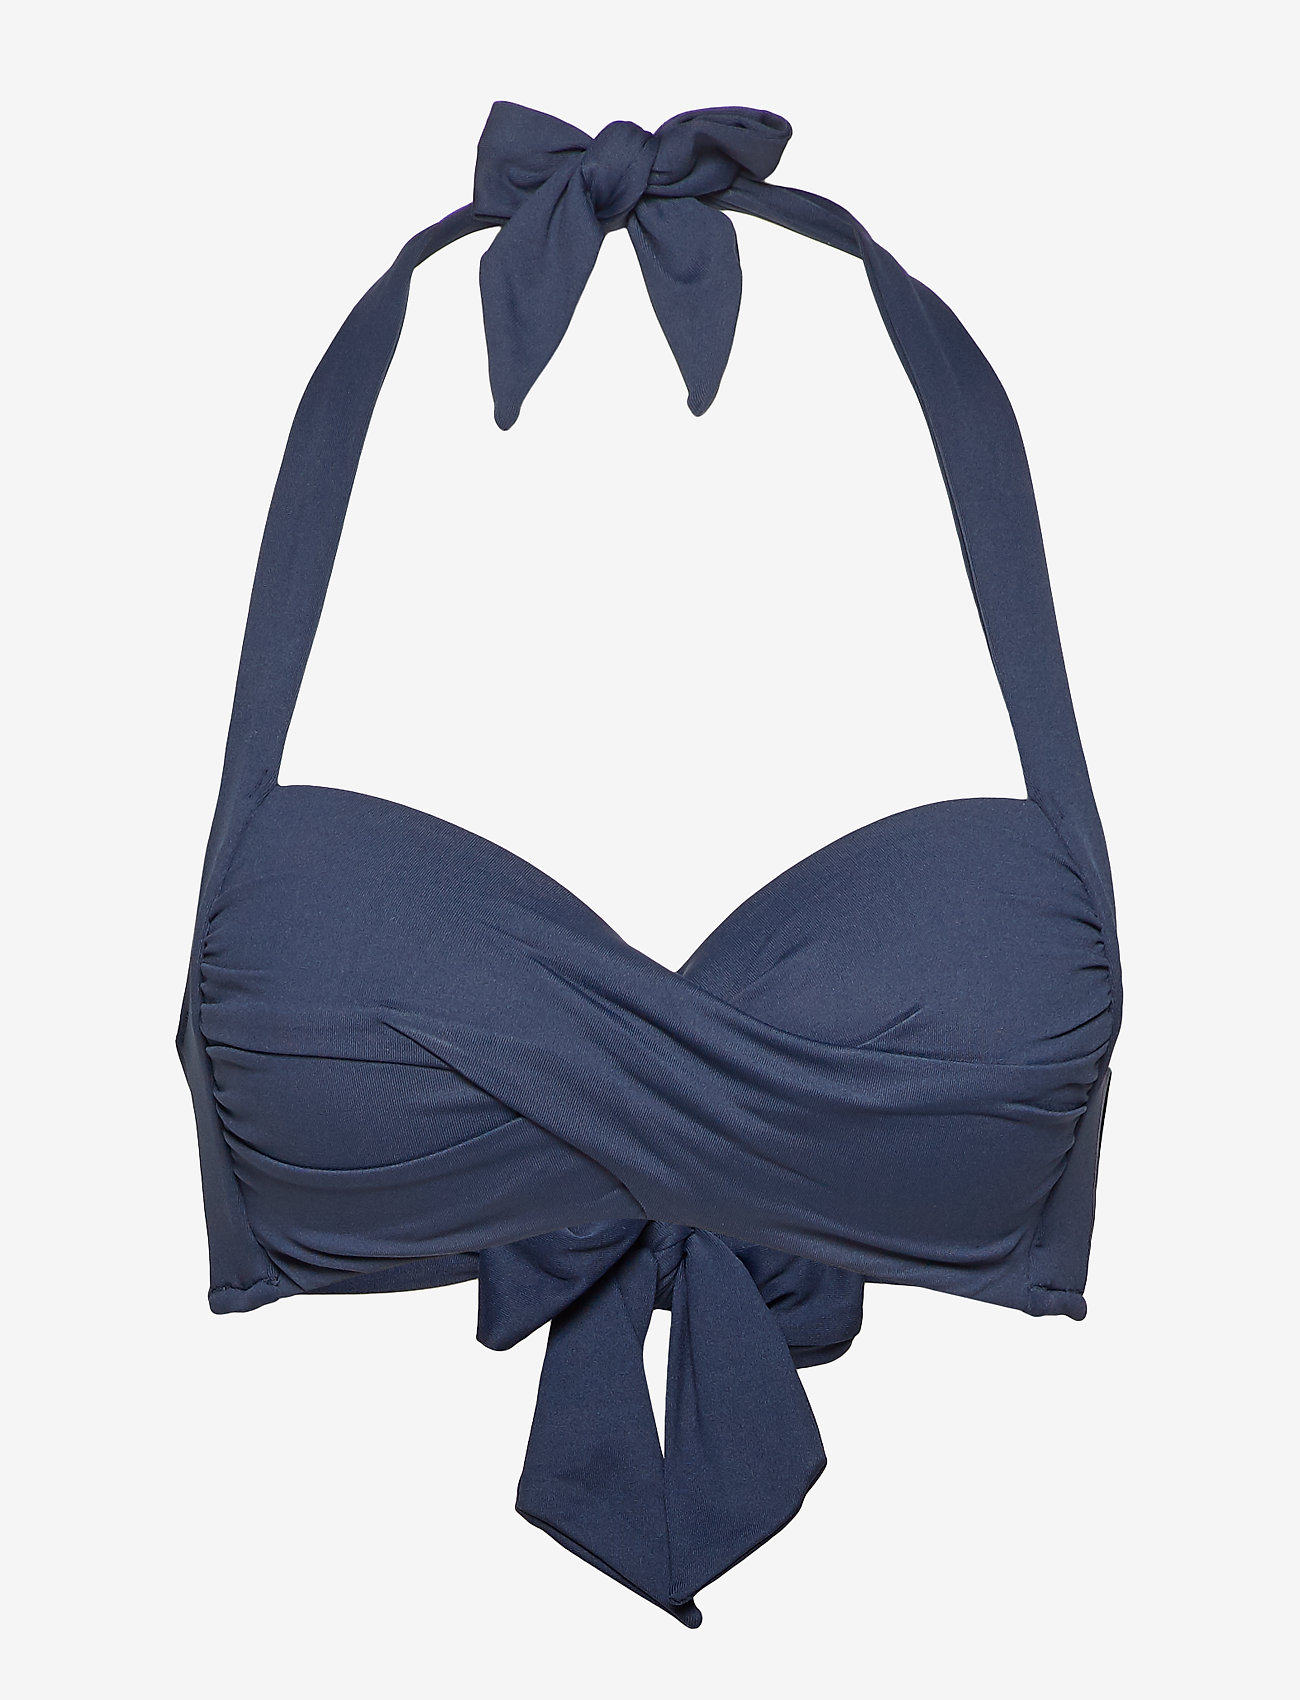 Seafolly Seafolly Twist Soft Cup Halter - Bikini tops | Boozt.com